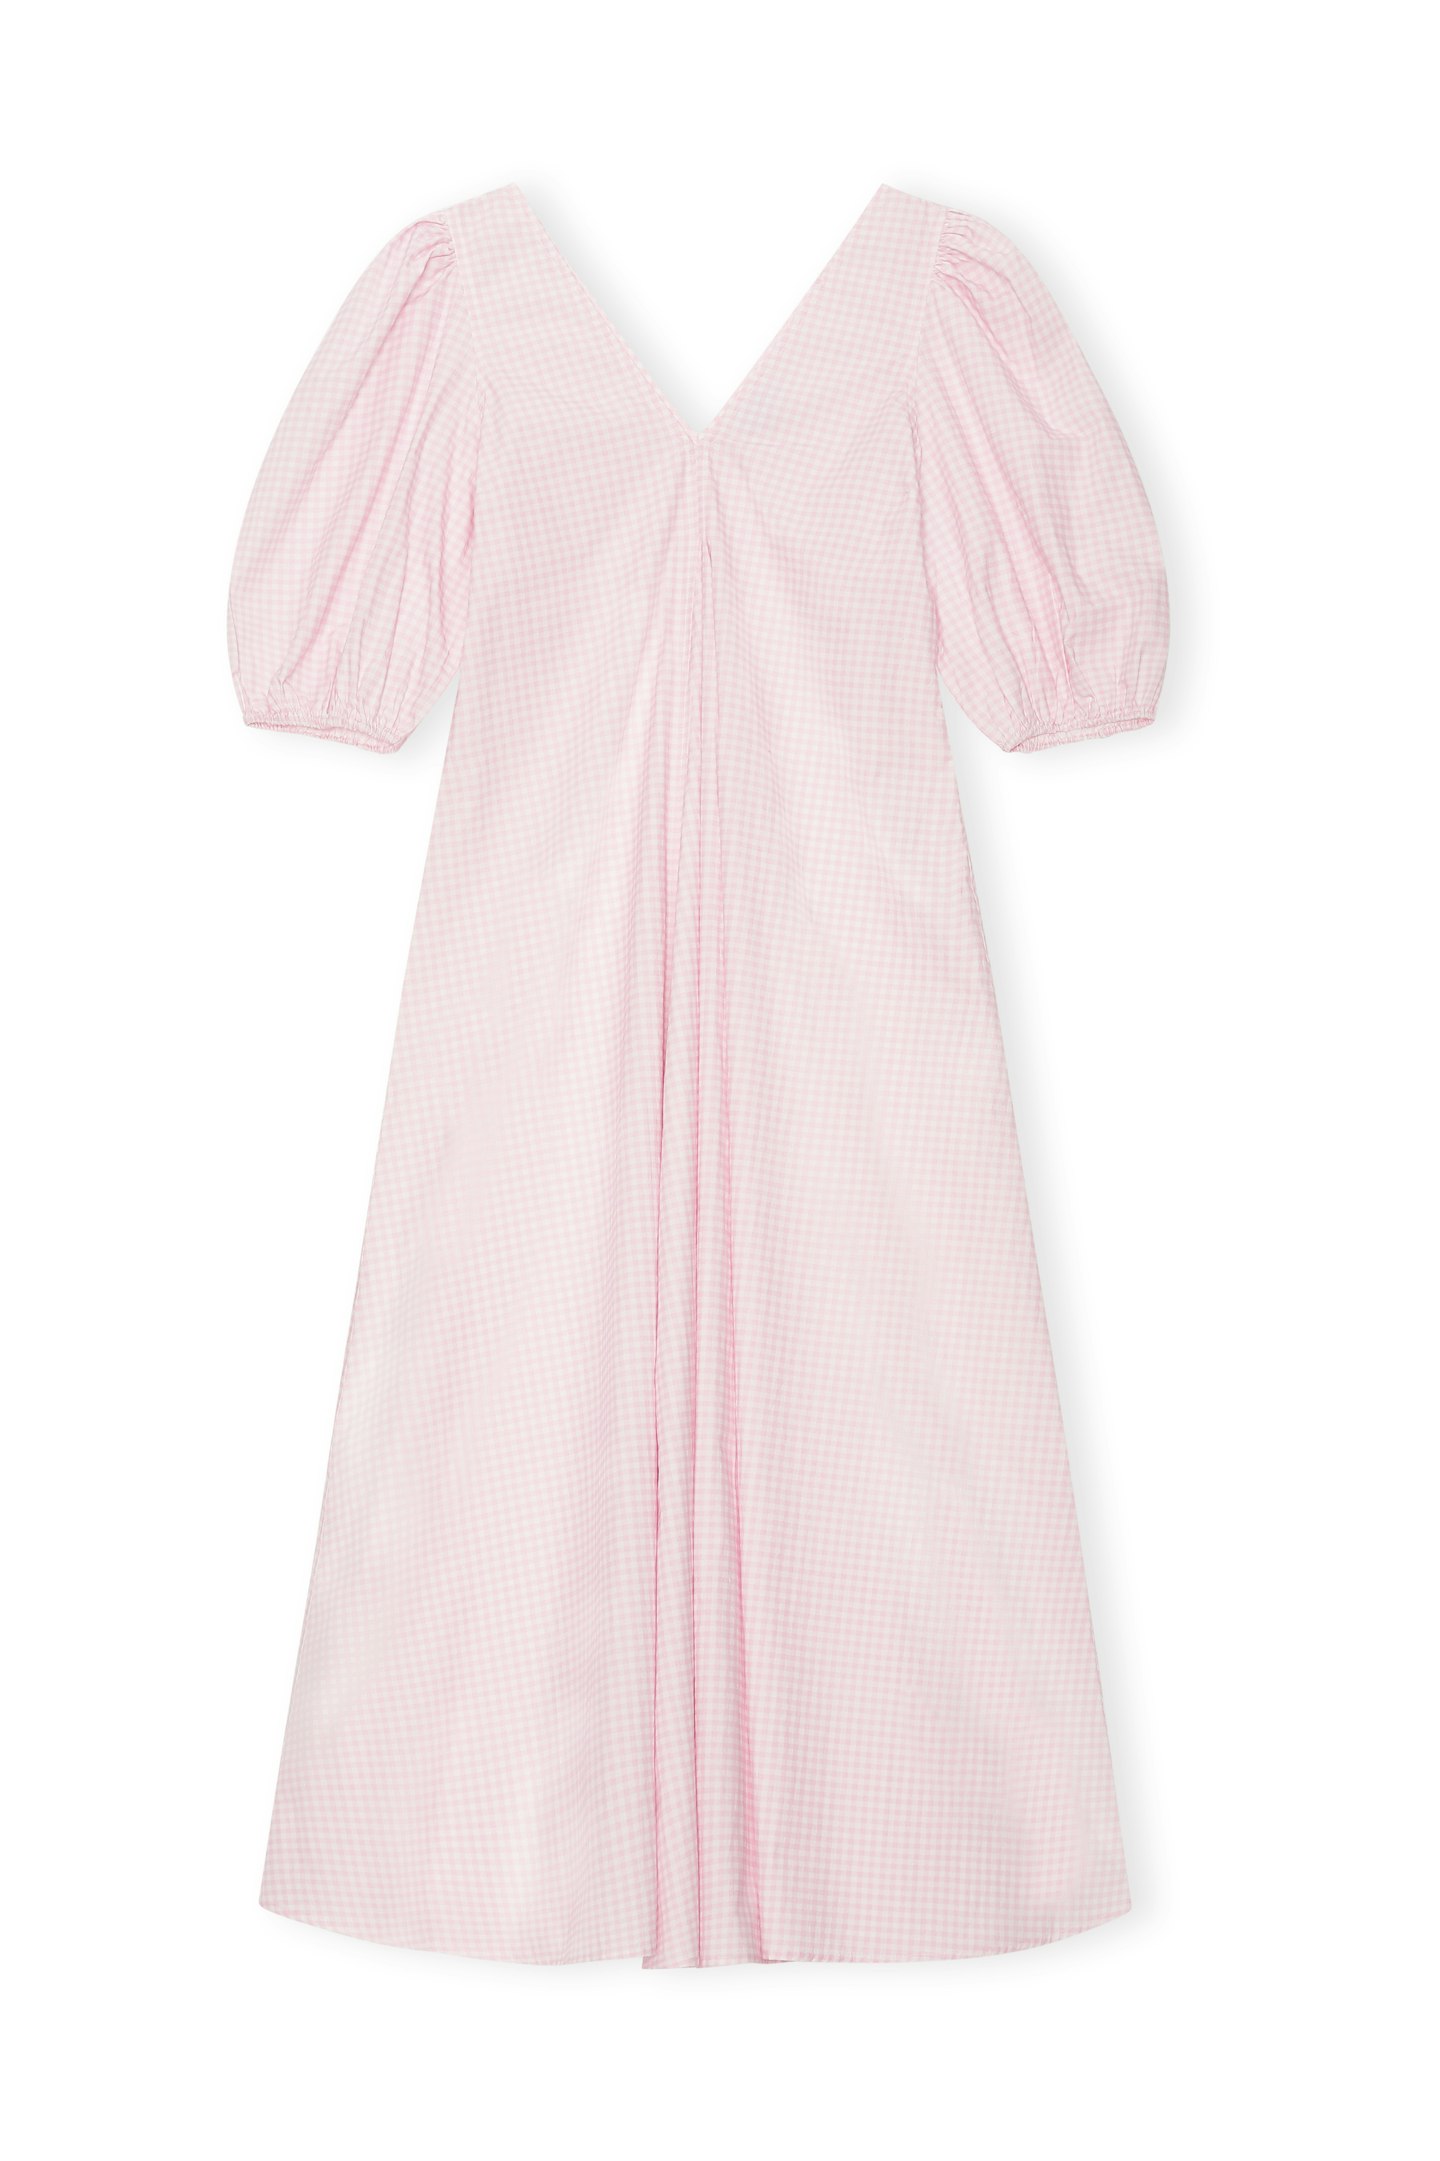 Ganni, Gingham Midi Dress, £210